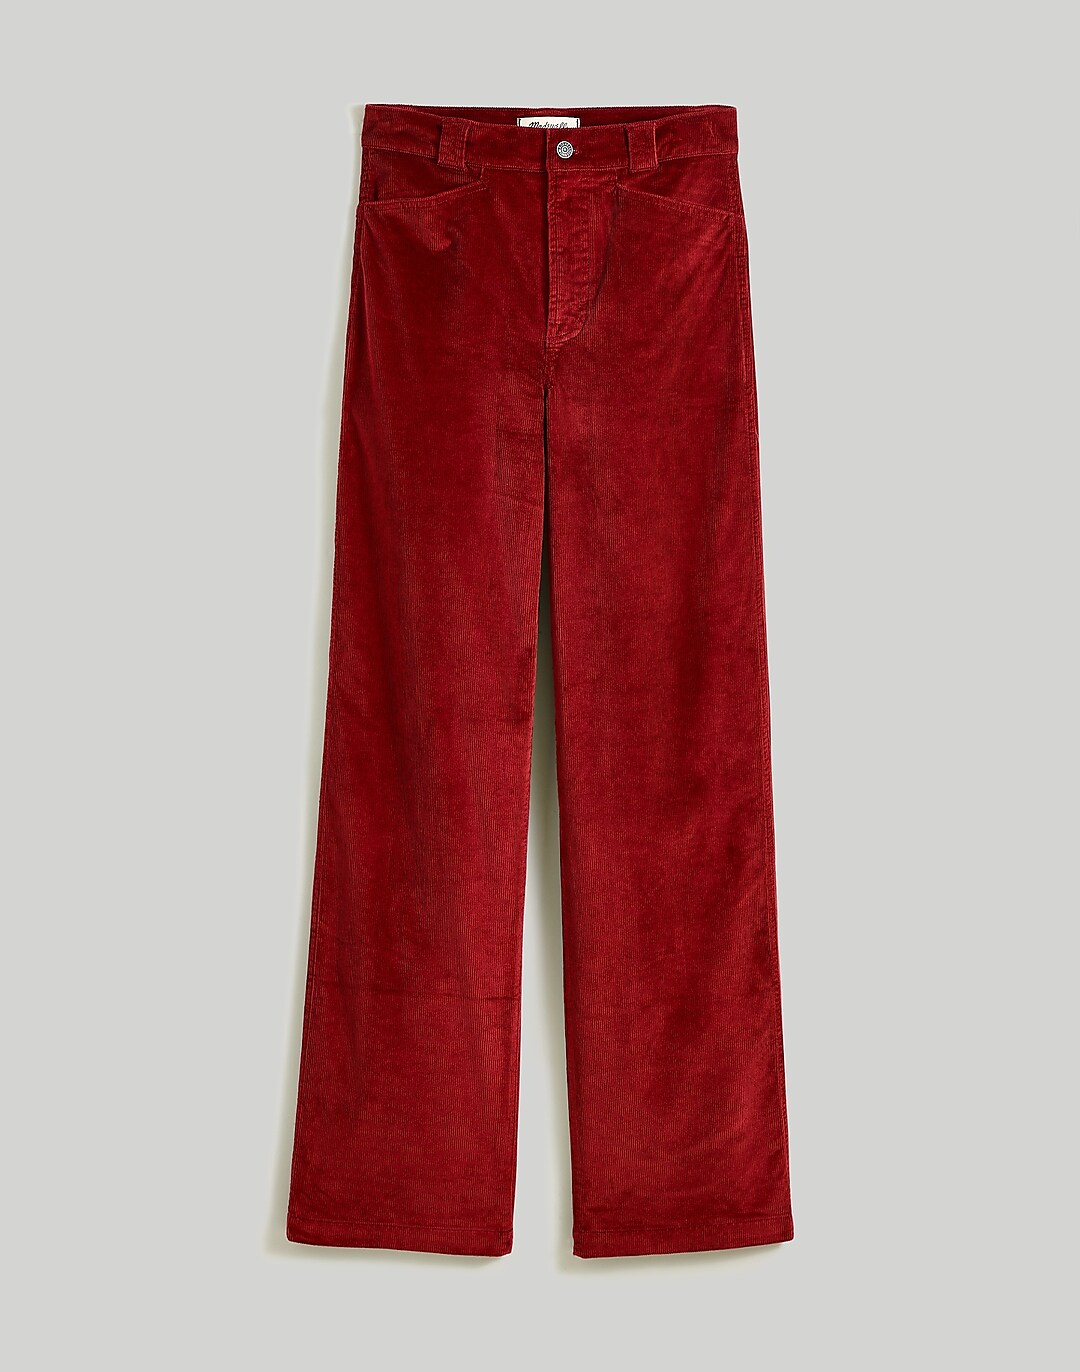 Red Corduroy Pants, High waist Long Corduroy Pants C2547 – Ylistyle